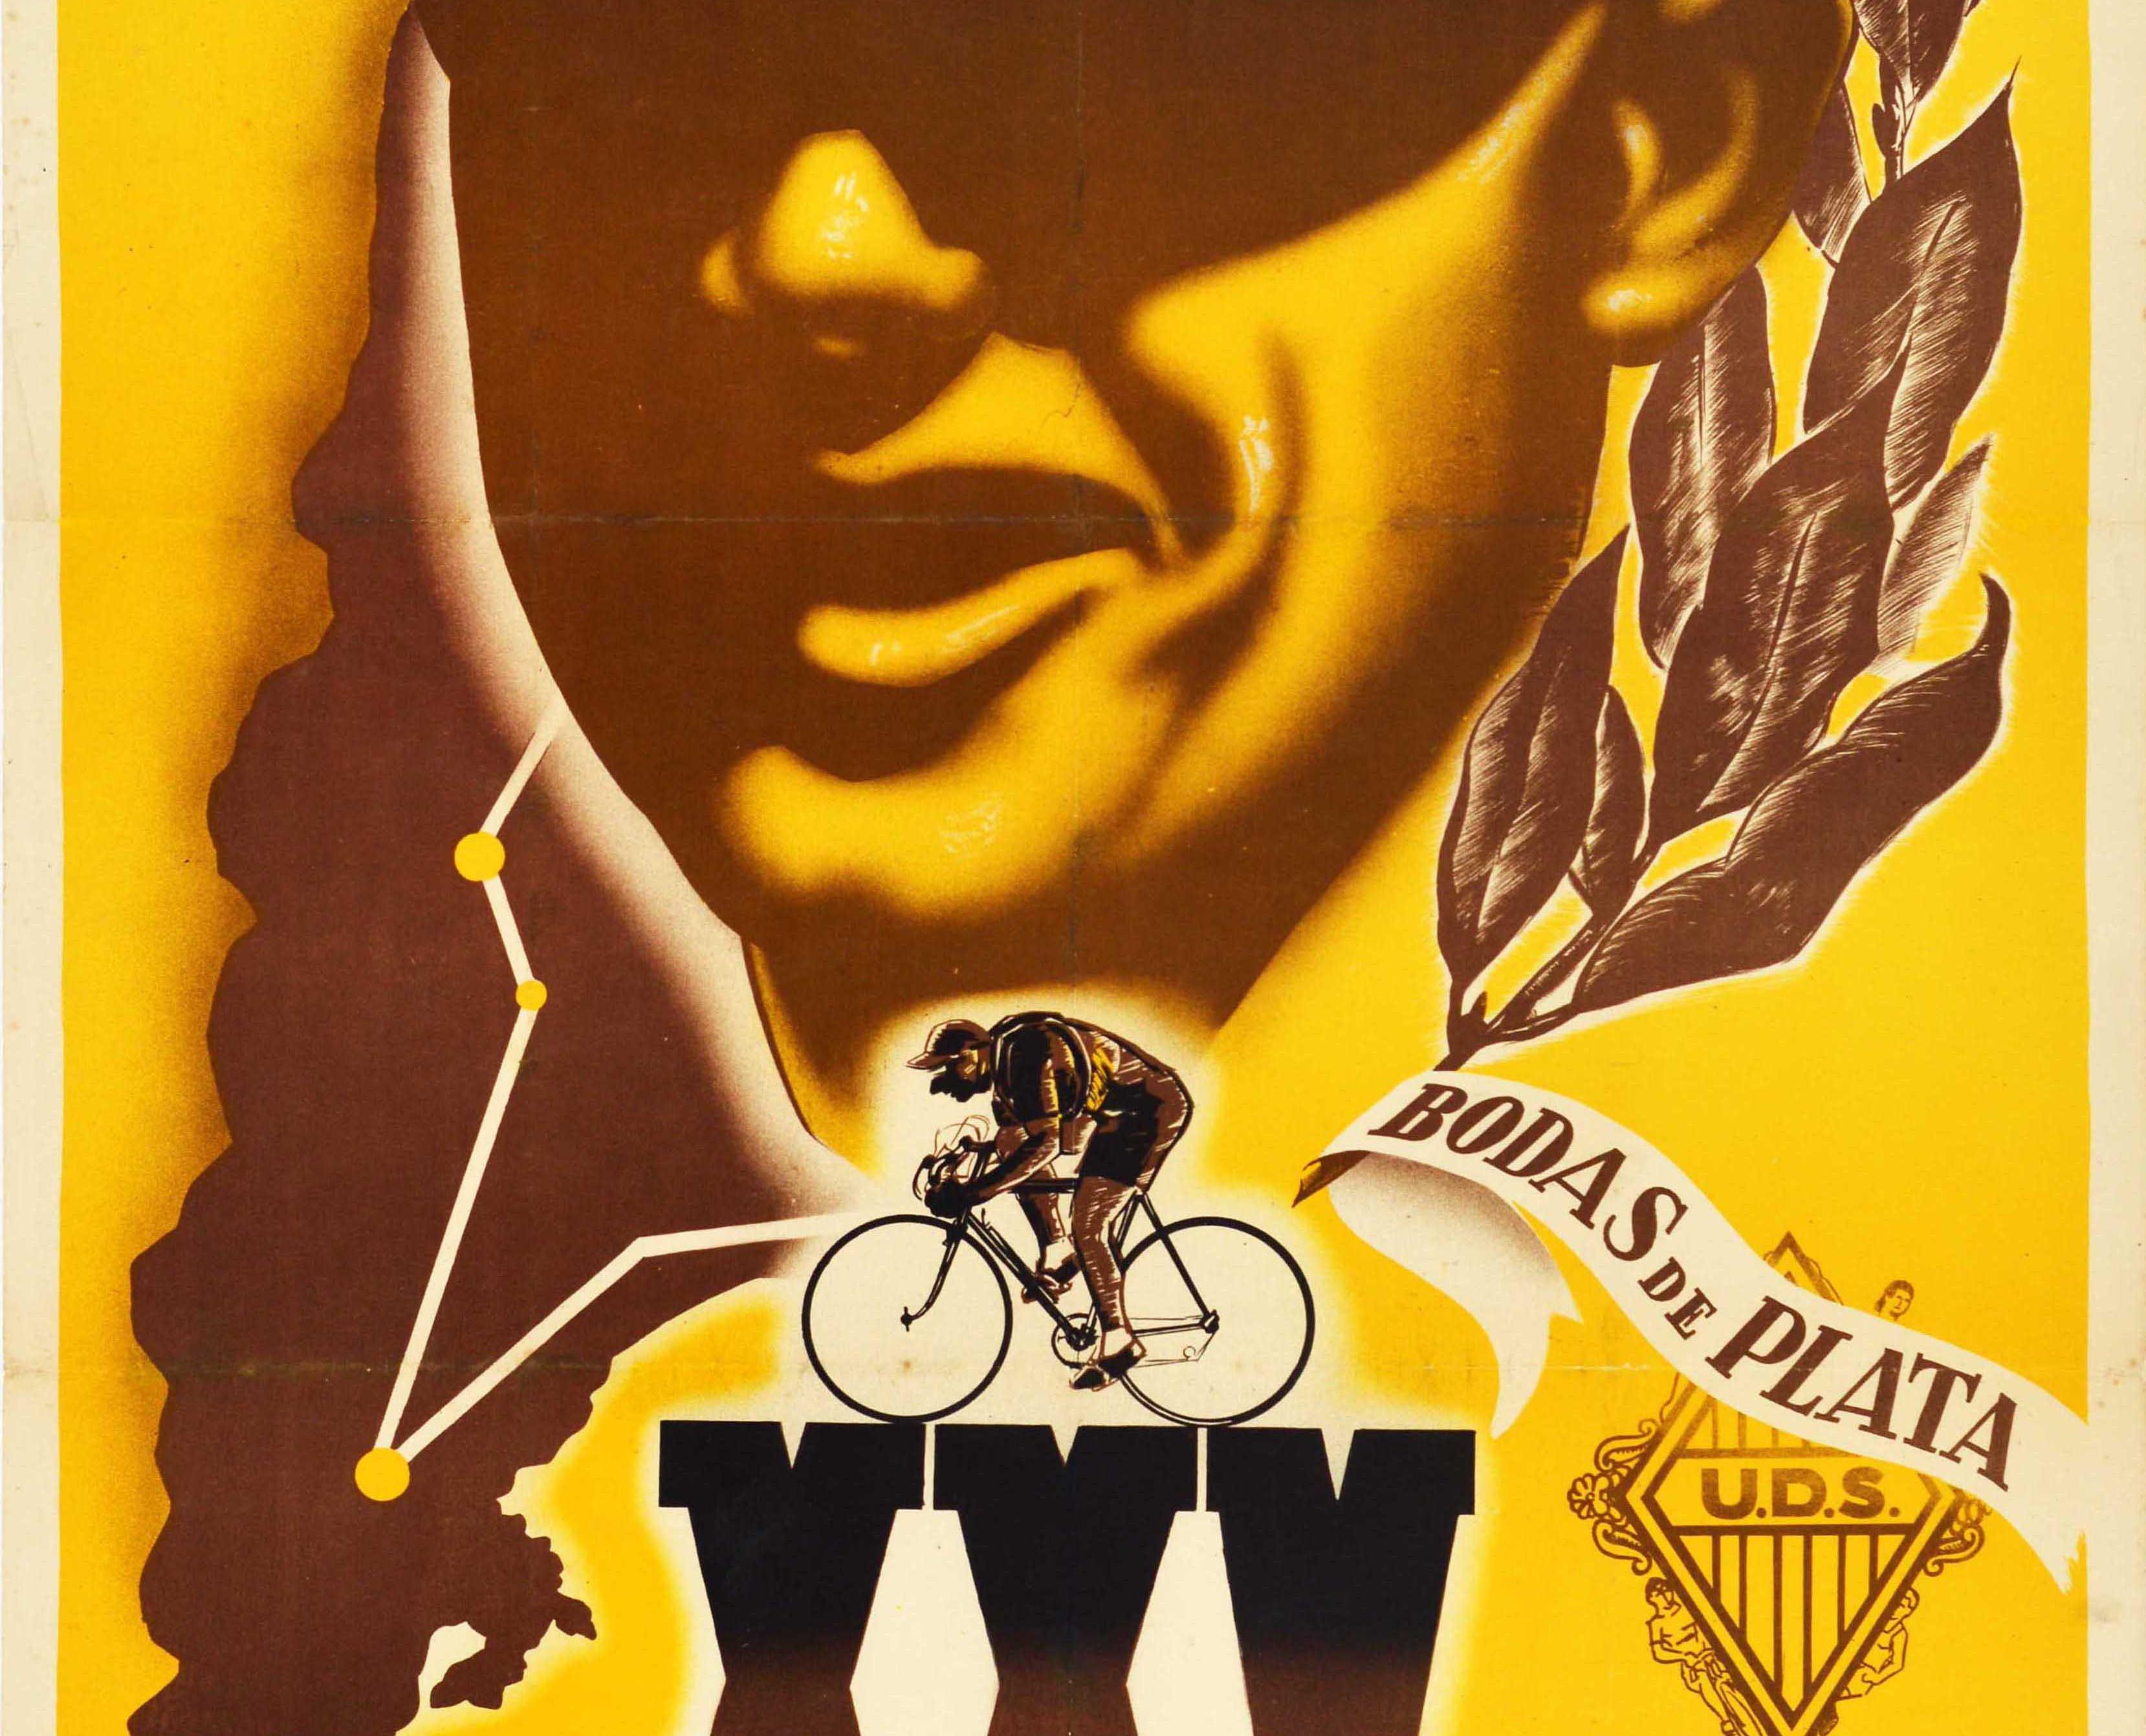 Original vintage cycling poster for the XXV Vuelta Ciclista a Cataluna V Gran Premio Bodas de Plata / XXV Catalonia Cycling Tour V Grand Prix Silver Anniversary held from 2-16 September 1945 featuring a great Art Deco style design showing a man in a